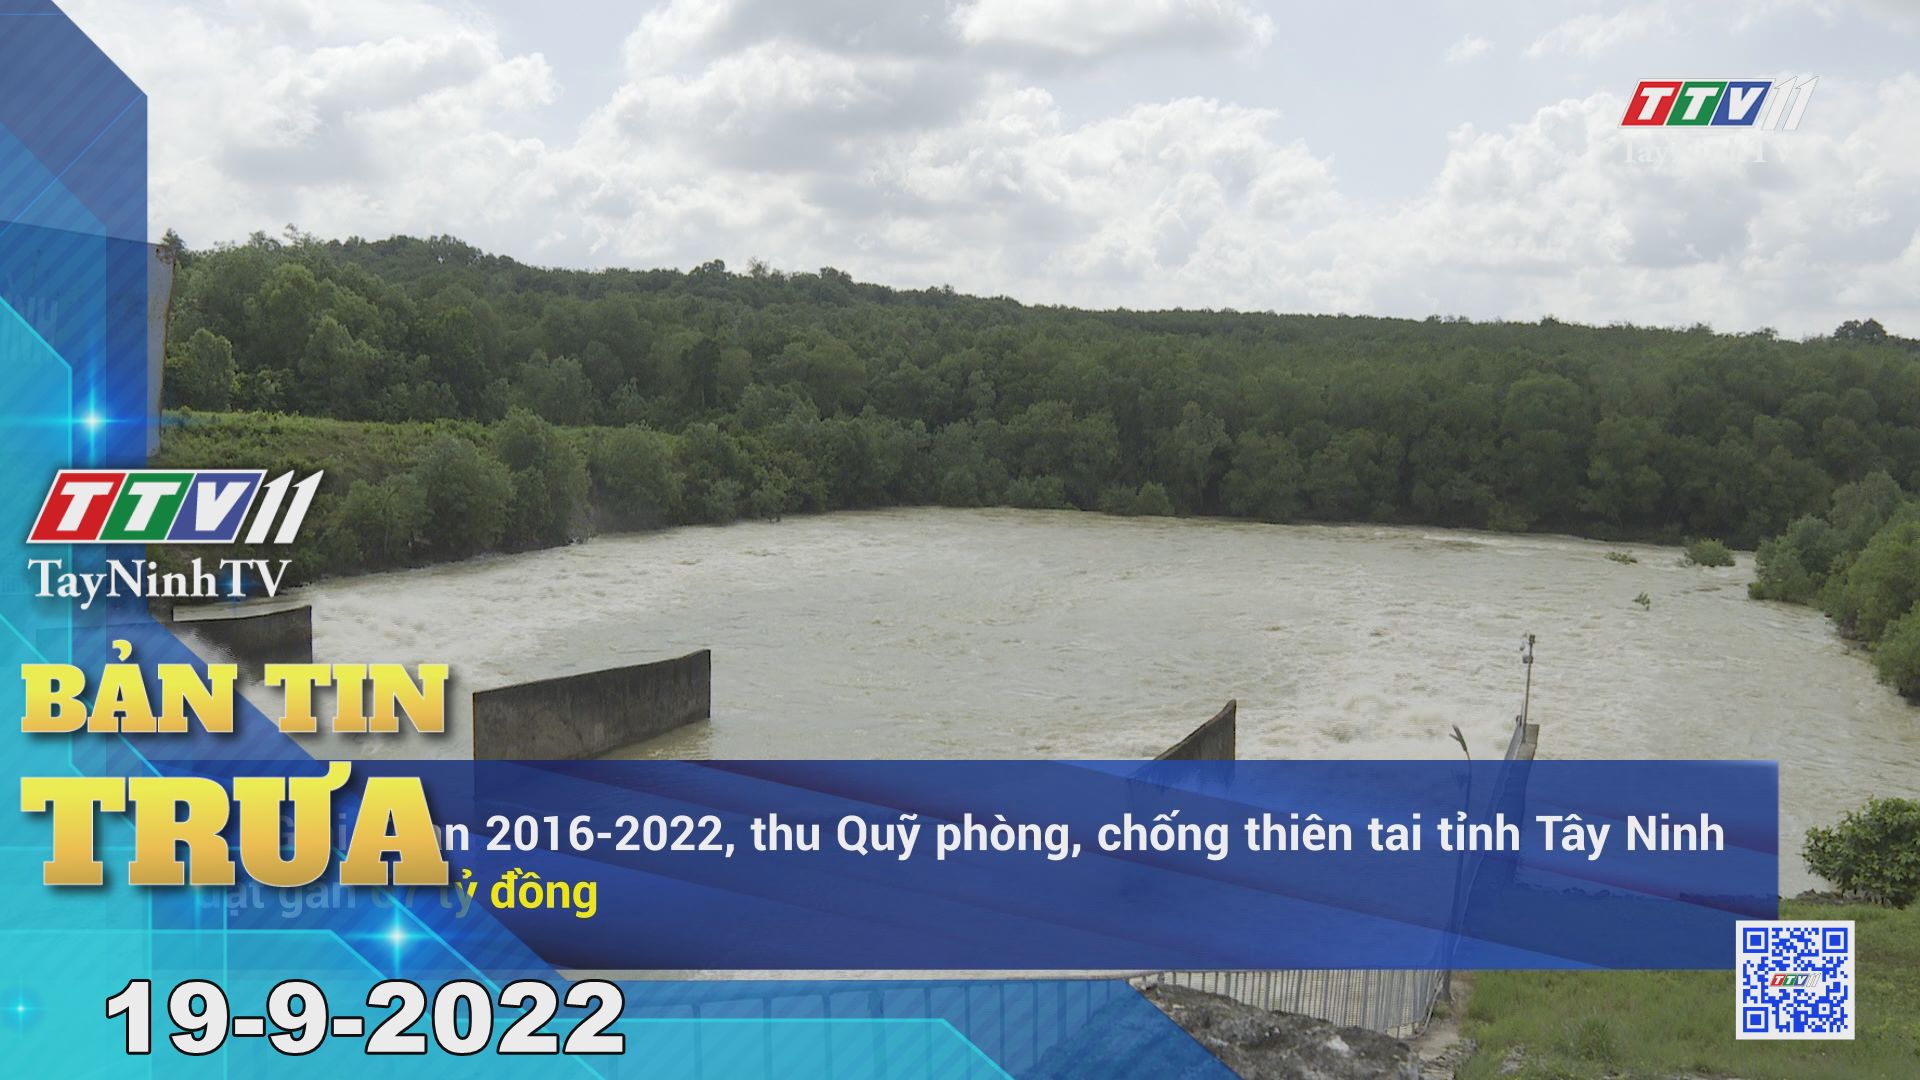 Bản tin trưa 19-9-2022 | Tin tức hôm nay | TayNinhTV